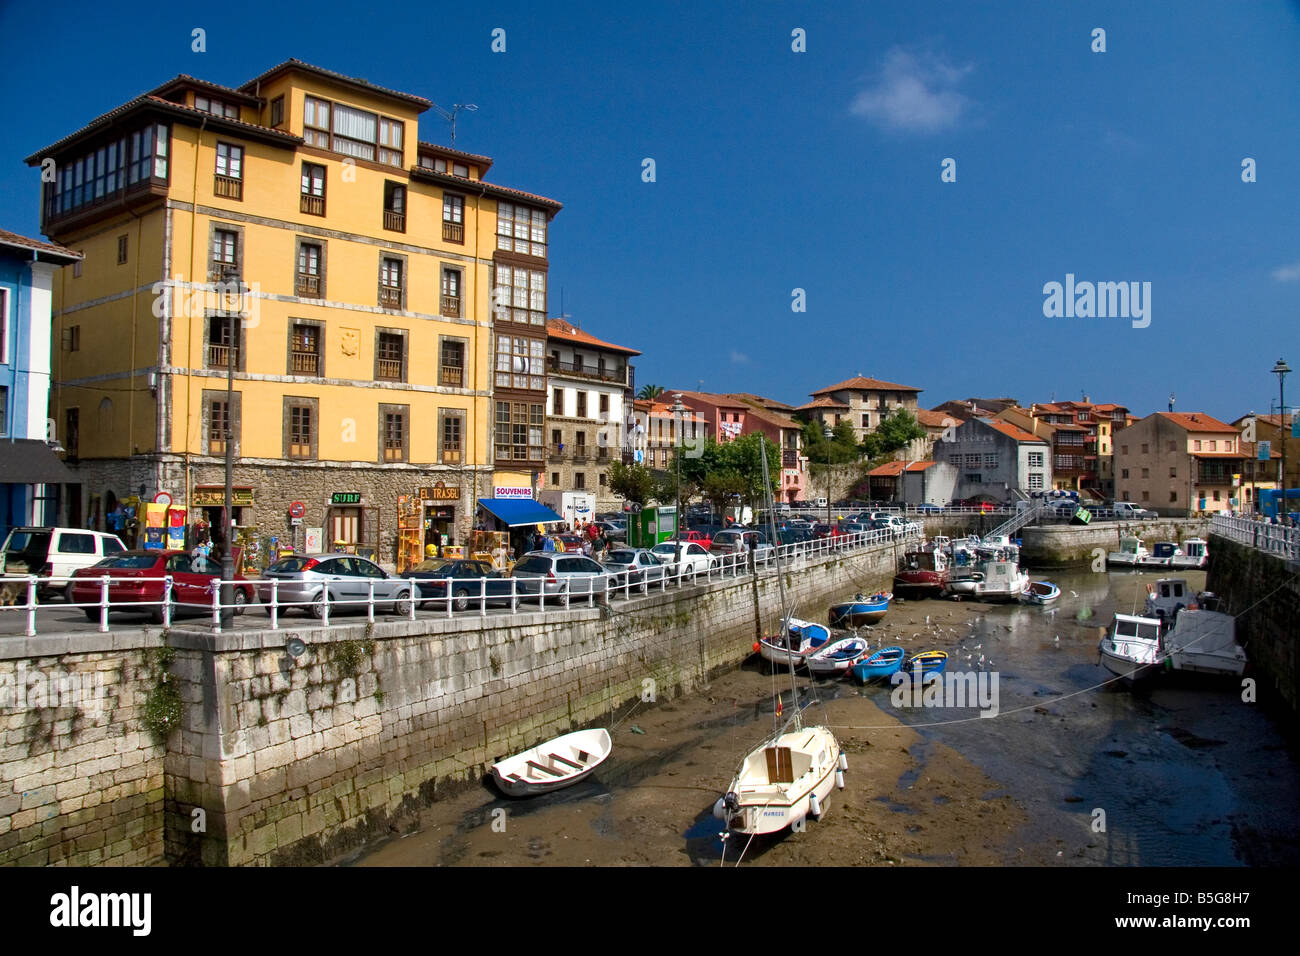 La bassa marea nel porto a Llanes Asturias Spagna Foto Stock